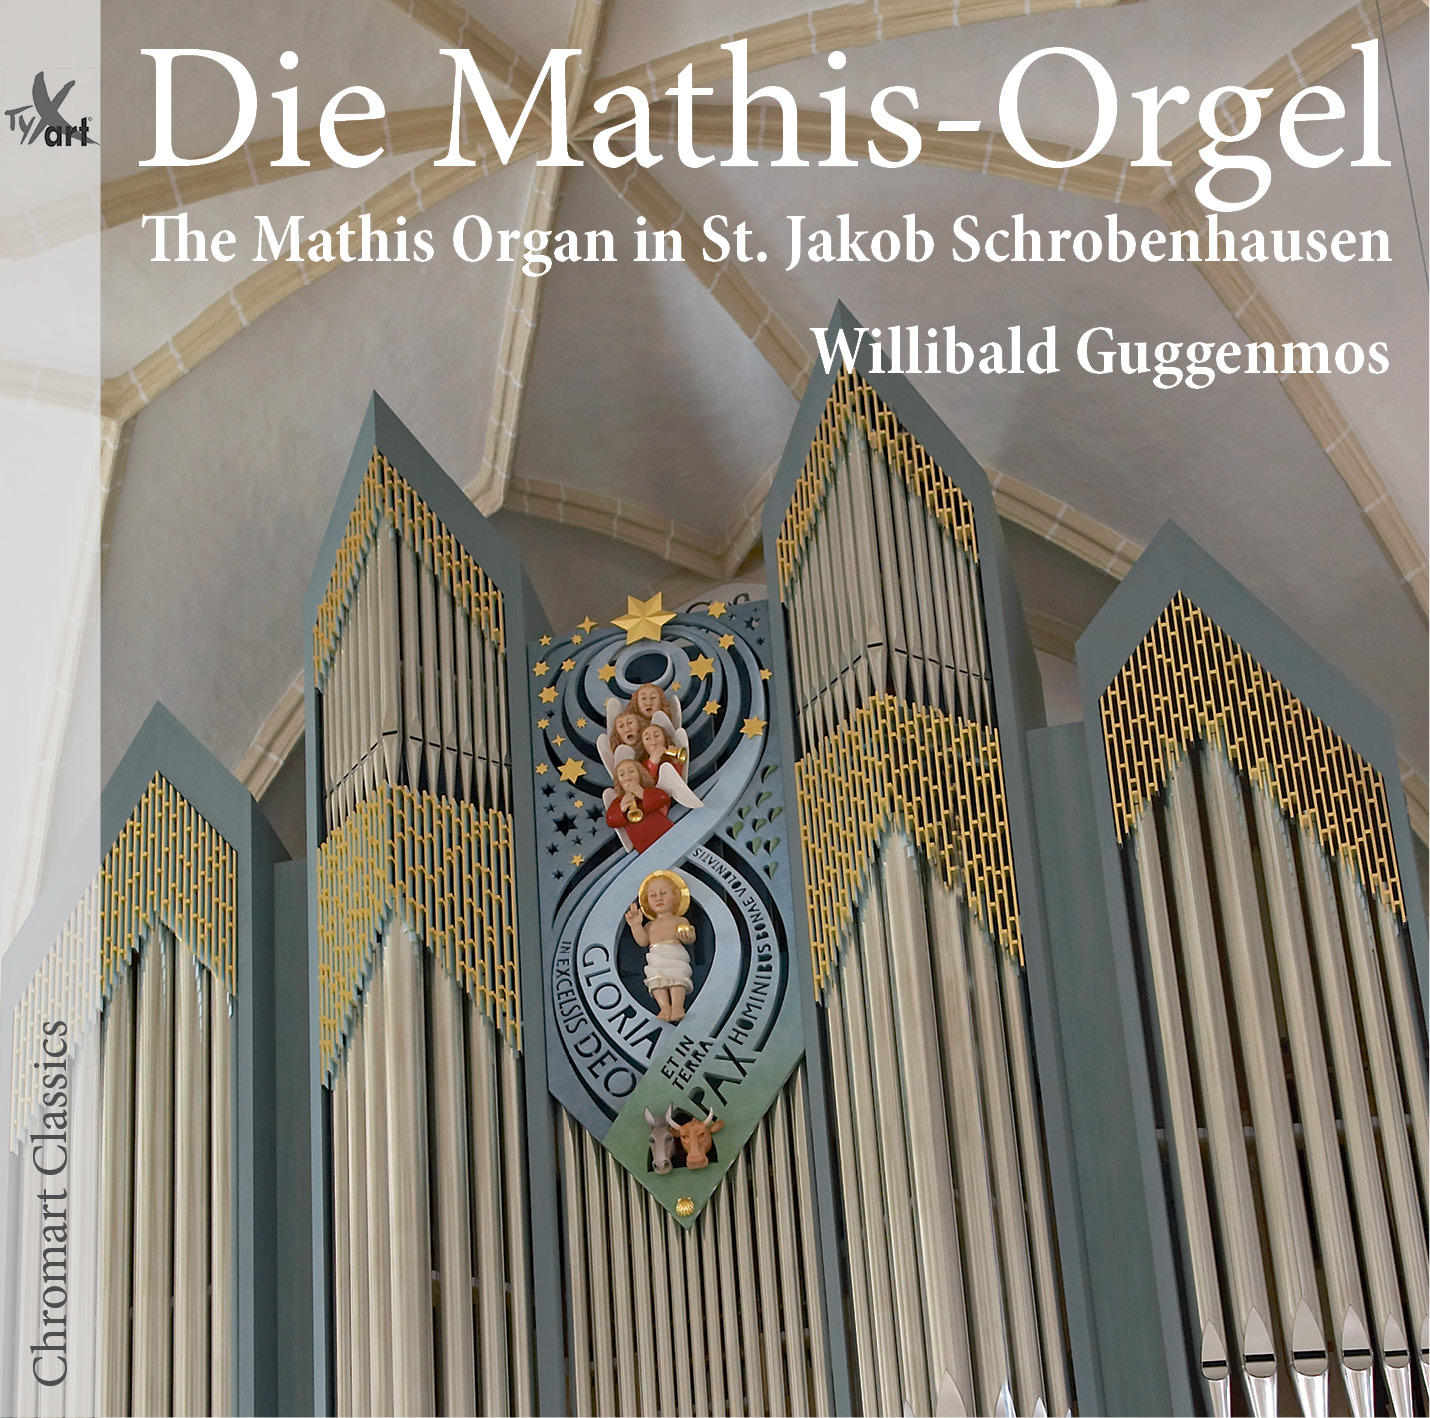 The Mathis Organ in St. Jakob Schrobenhausen - Willibald Guggenmos